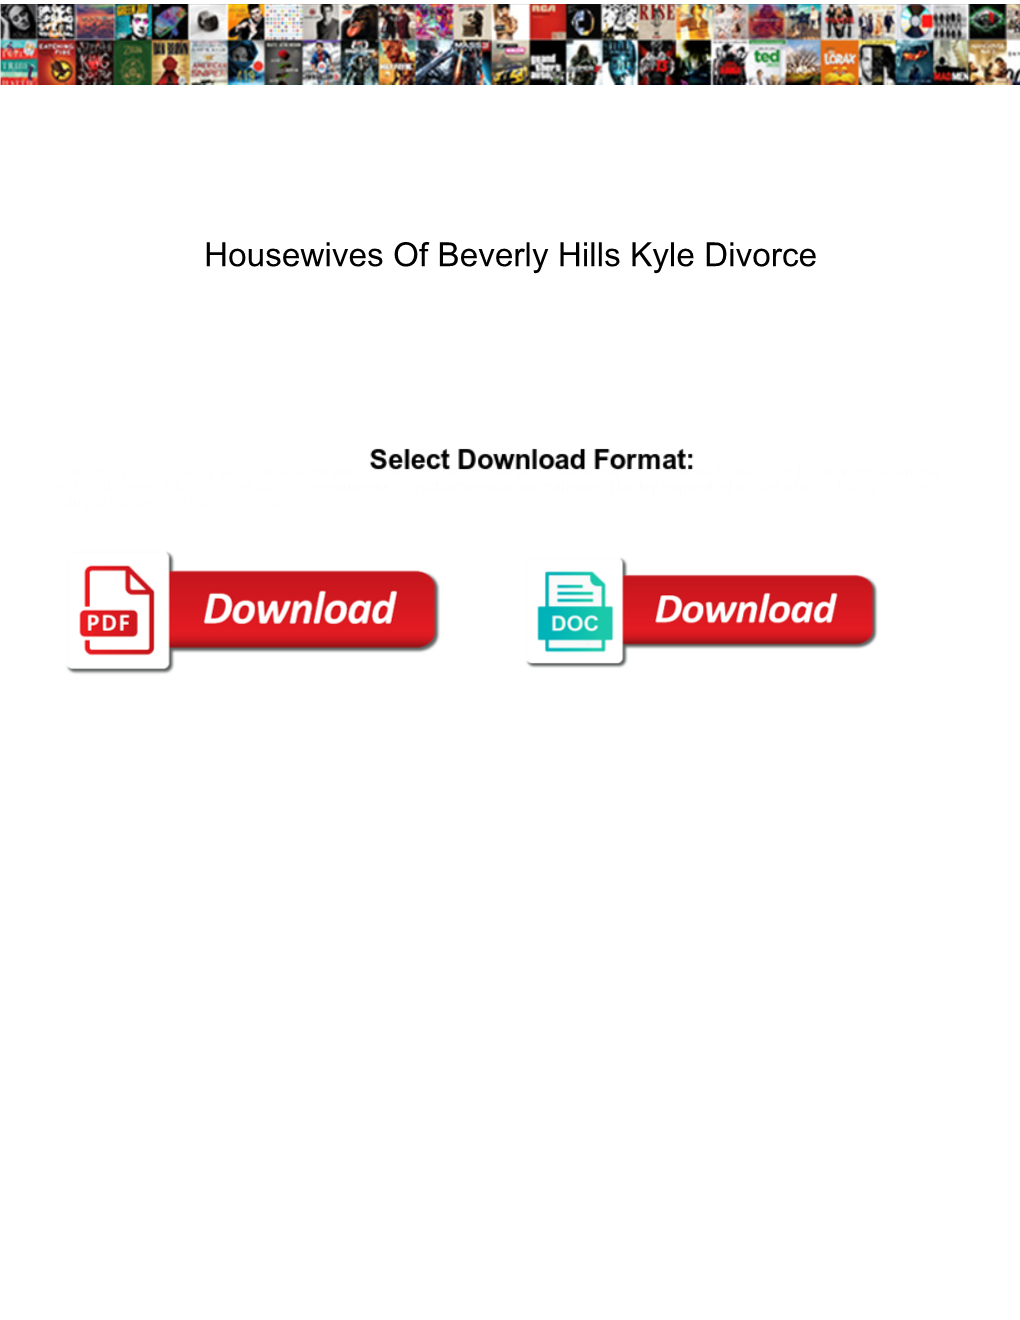 Housewives of Beverly Hills Kyle Divorce Glance